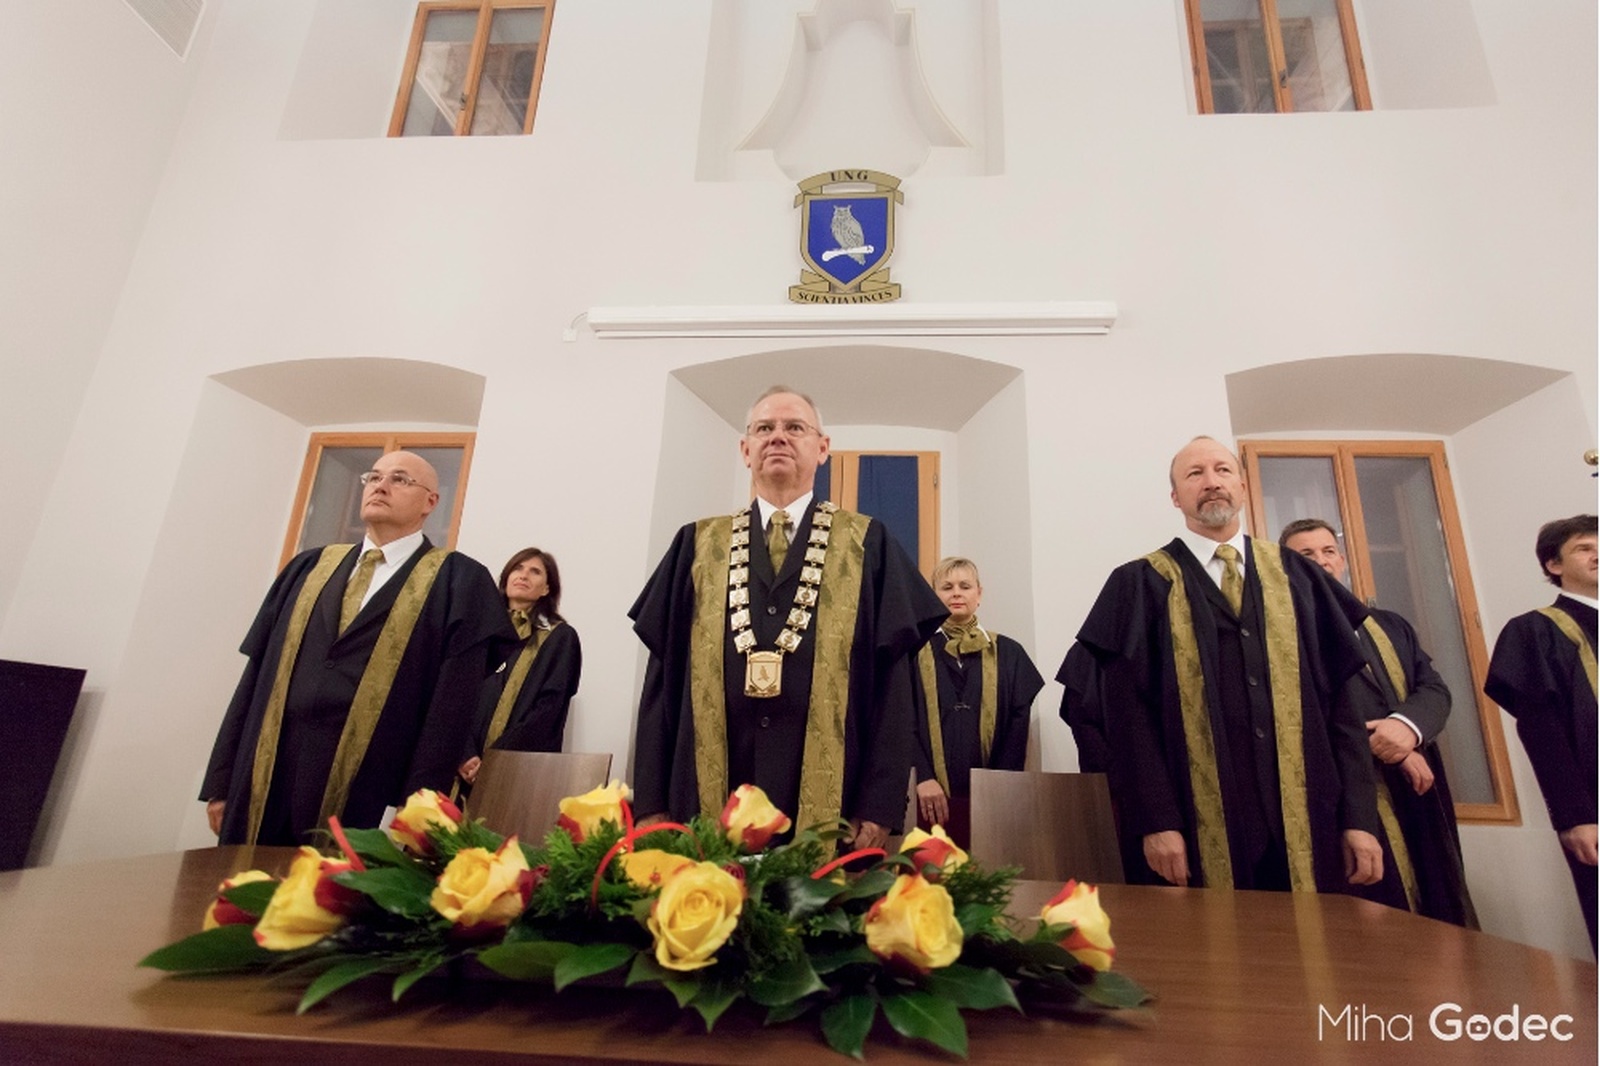 Rector, Vice-rectors and Deans of the University of Nova Gorica.